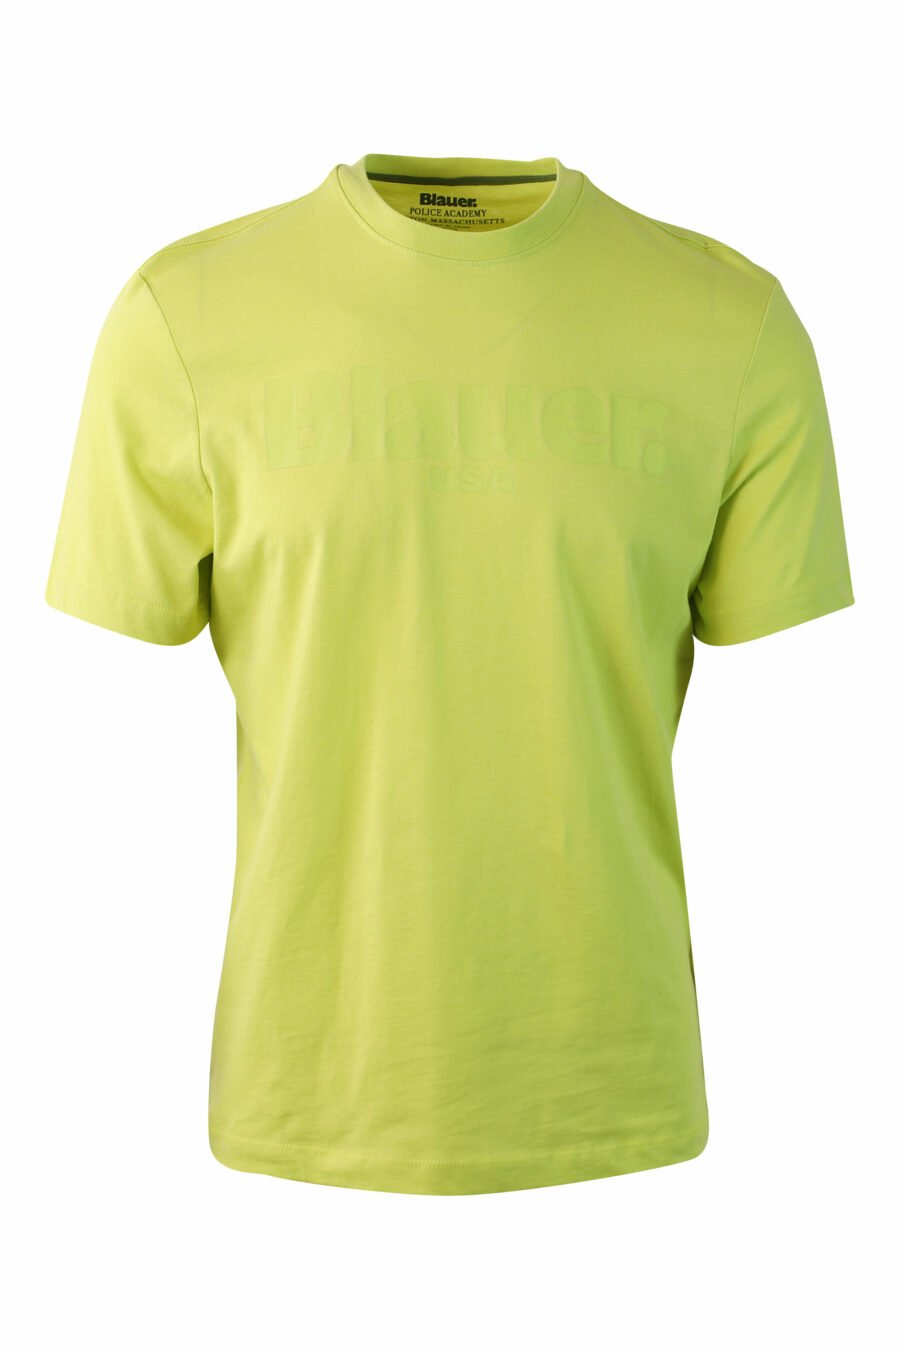 Lindgrünes T-Shirt mit einfarbigem Maxilogo - IMG 0073